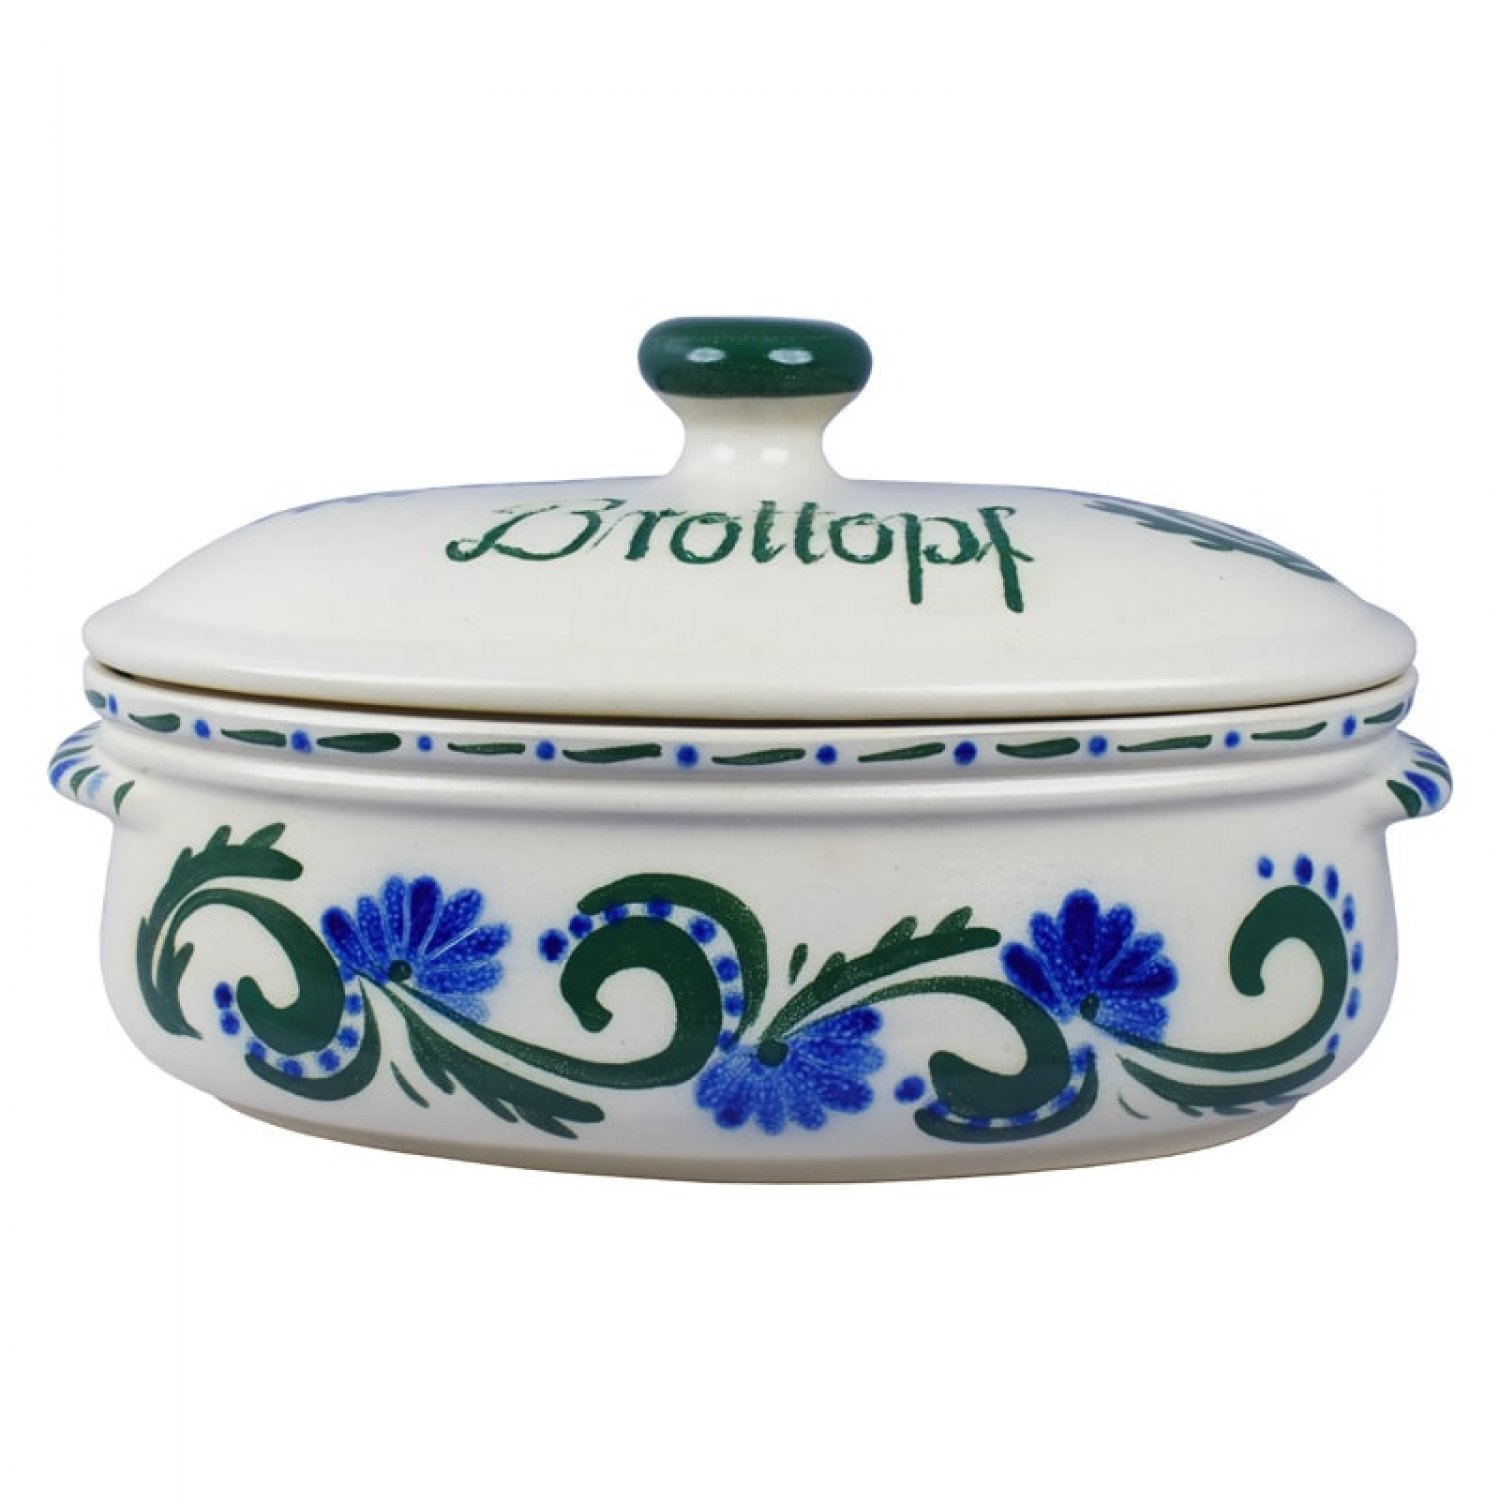 Bild zu Brottopf Keramik oval groß Dekor grün-blau